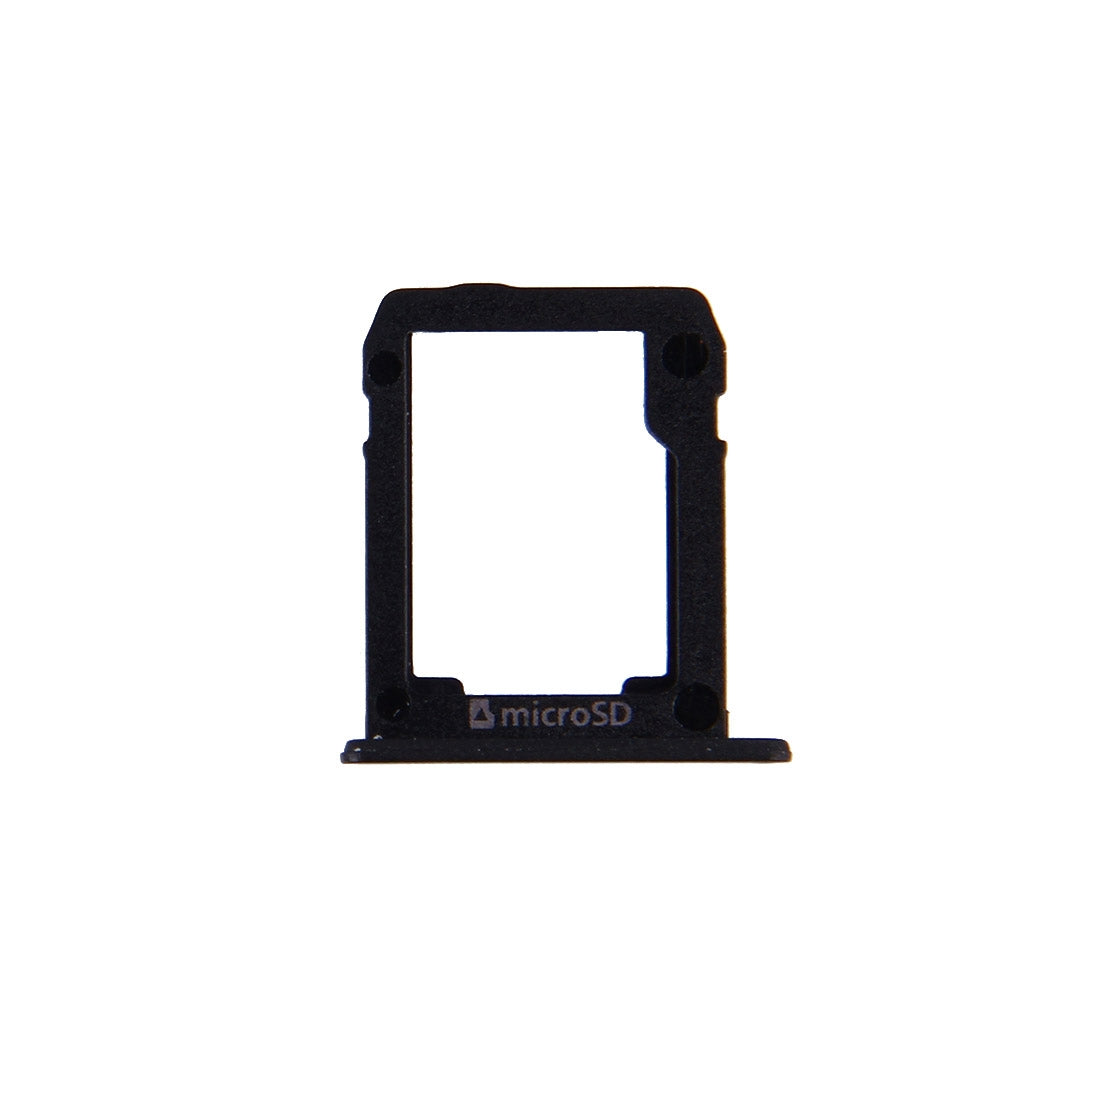 Support Plateau Micro SD Samsung Galaxy Tab S2 8.0 / T715 Noir